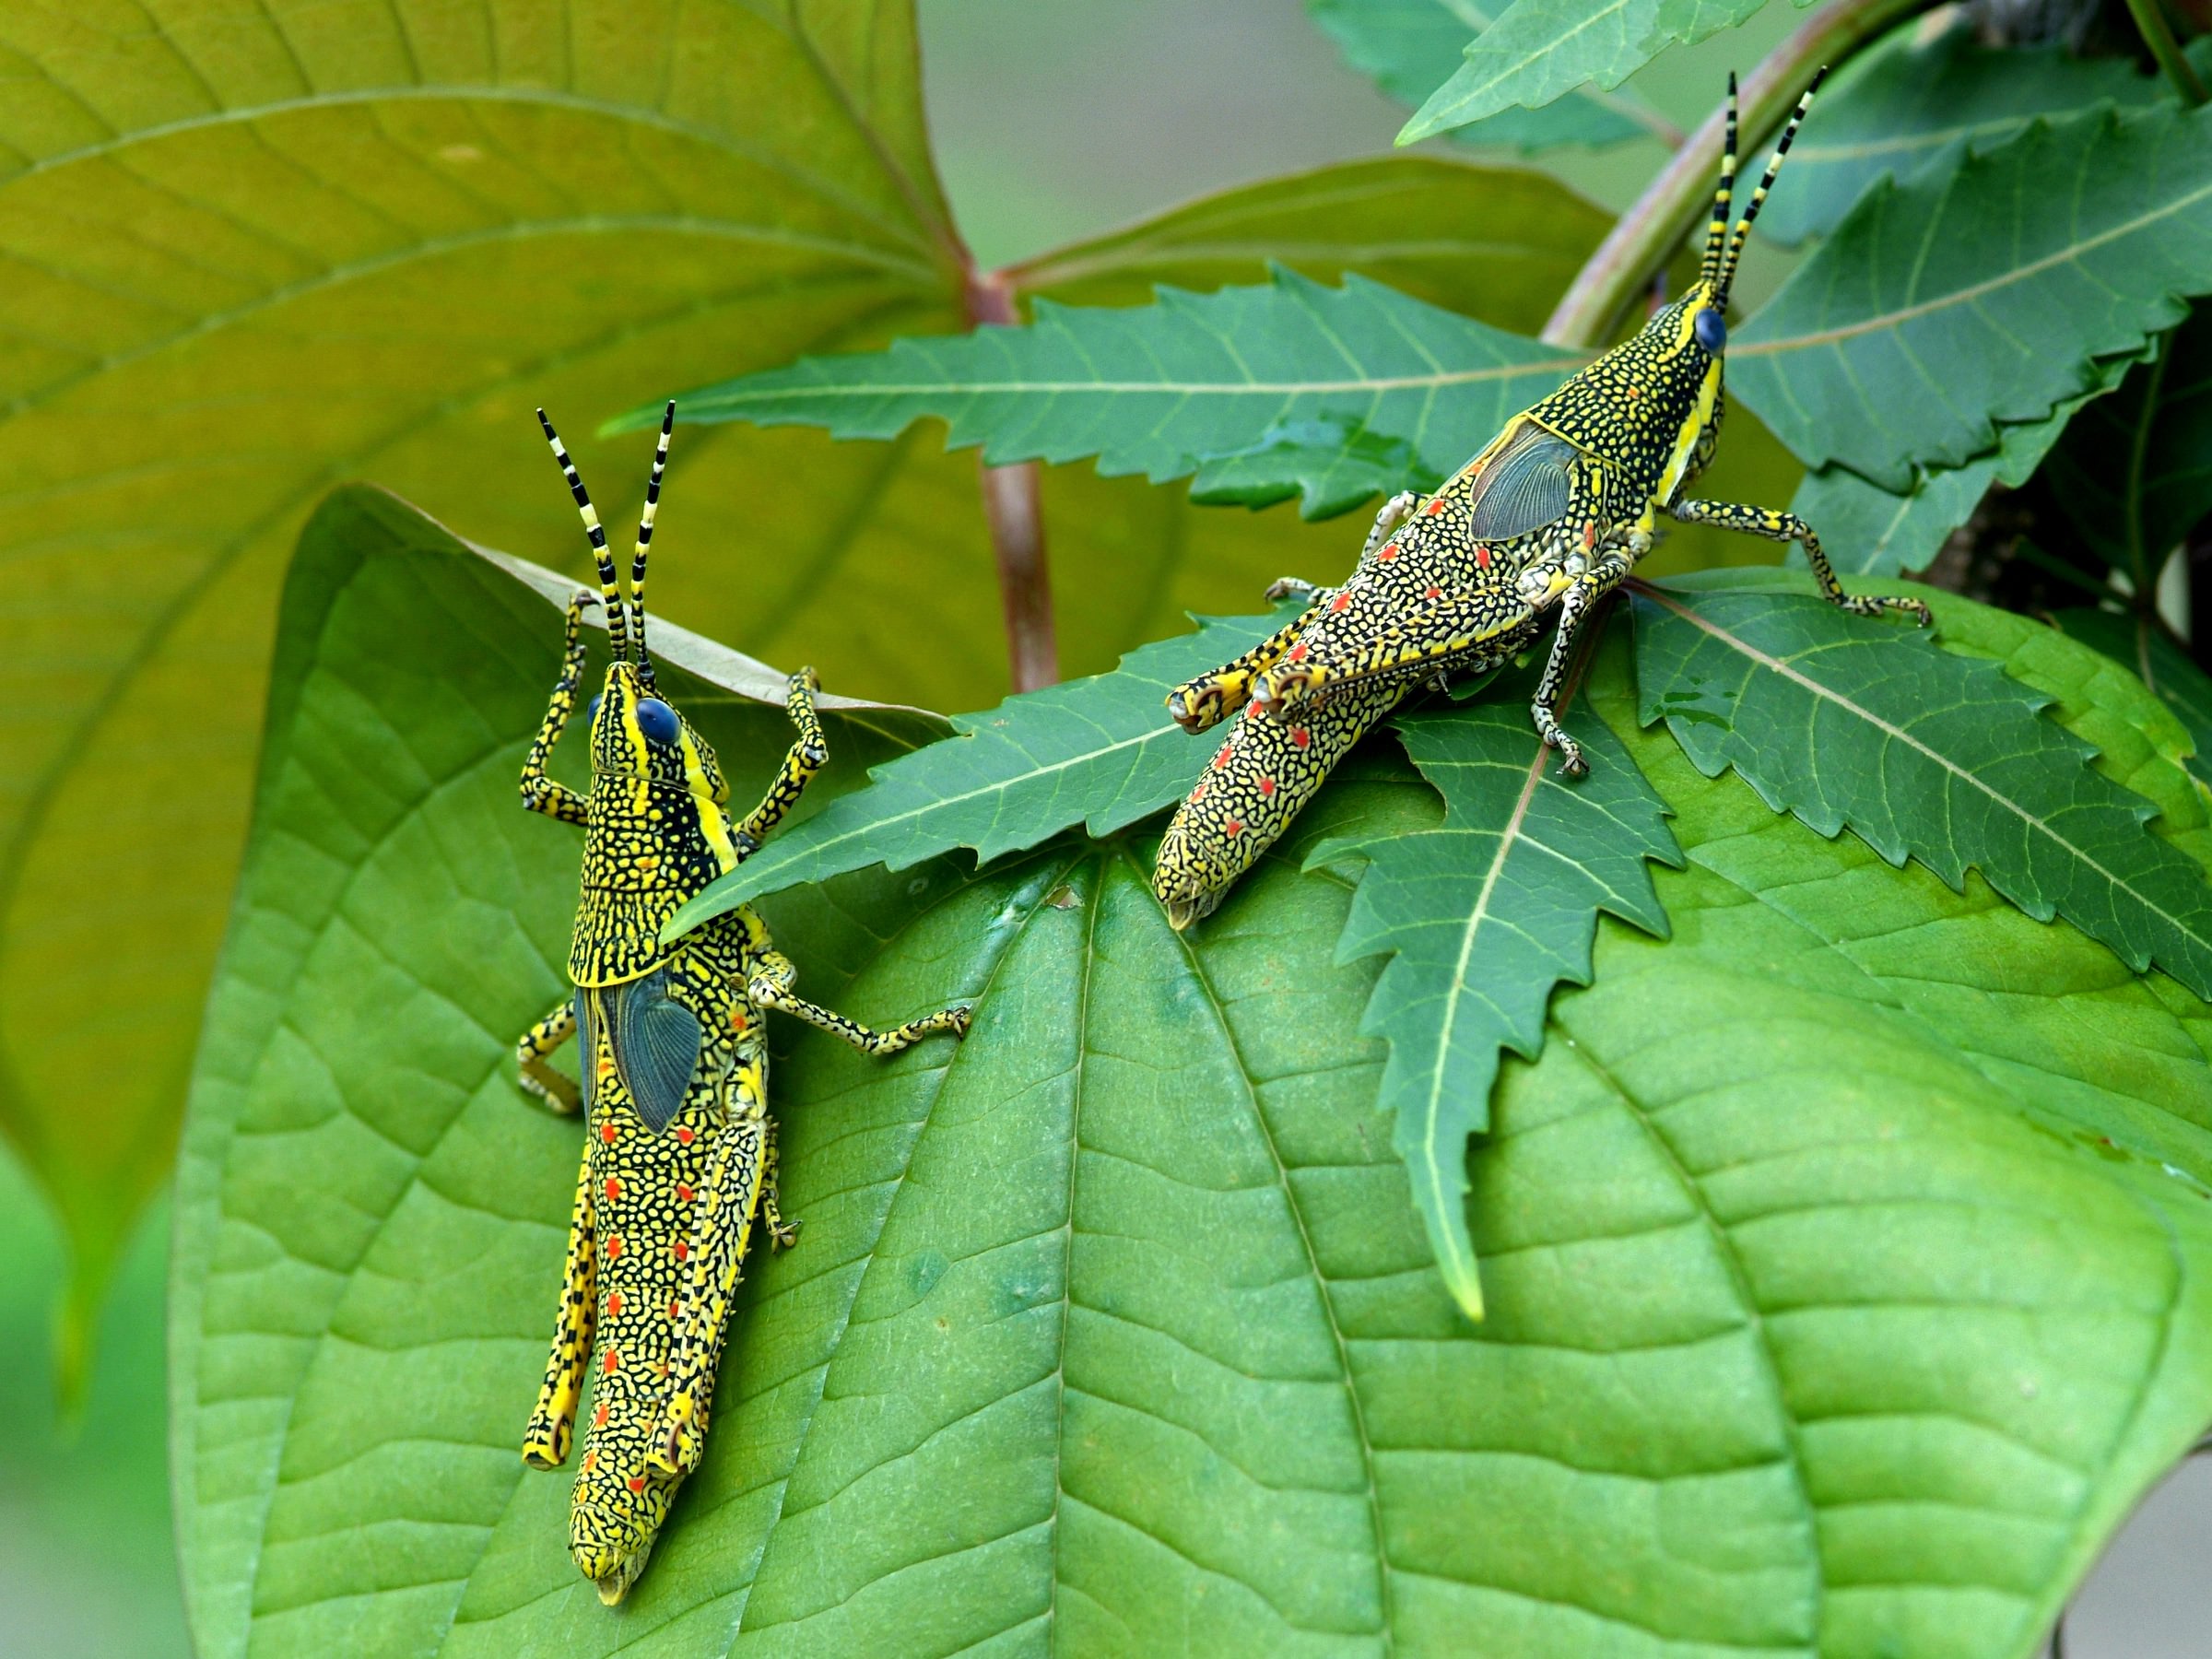 Two nymphs of the painted (or gaudy) grasshopper Poekilocerus pictus on roadside vegetation at Dediyapada in Vadodara district, Gujarat state.